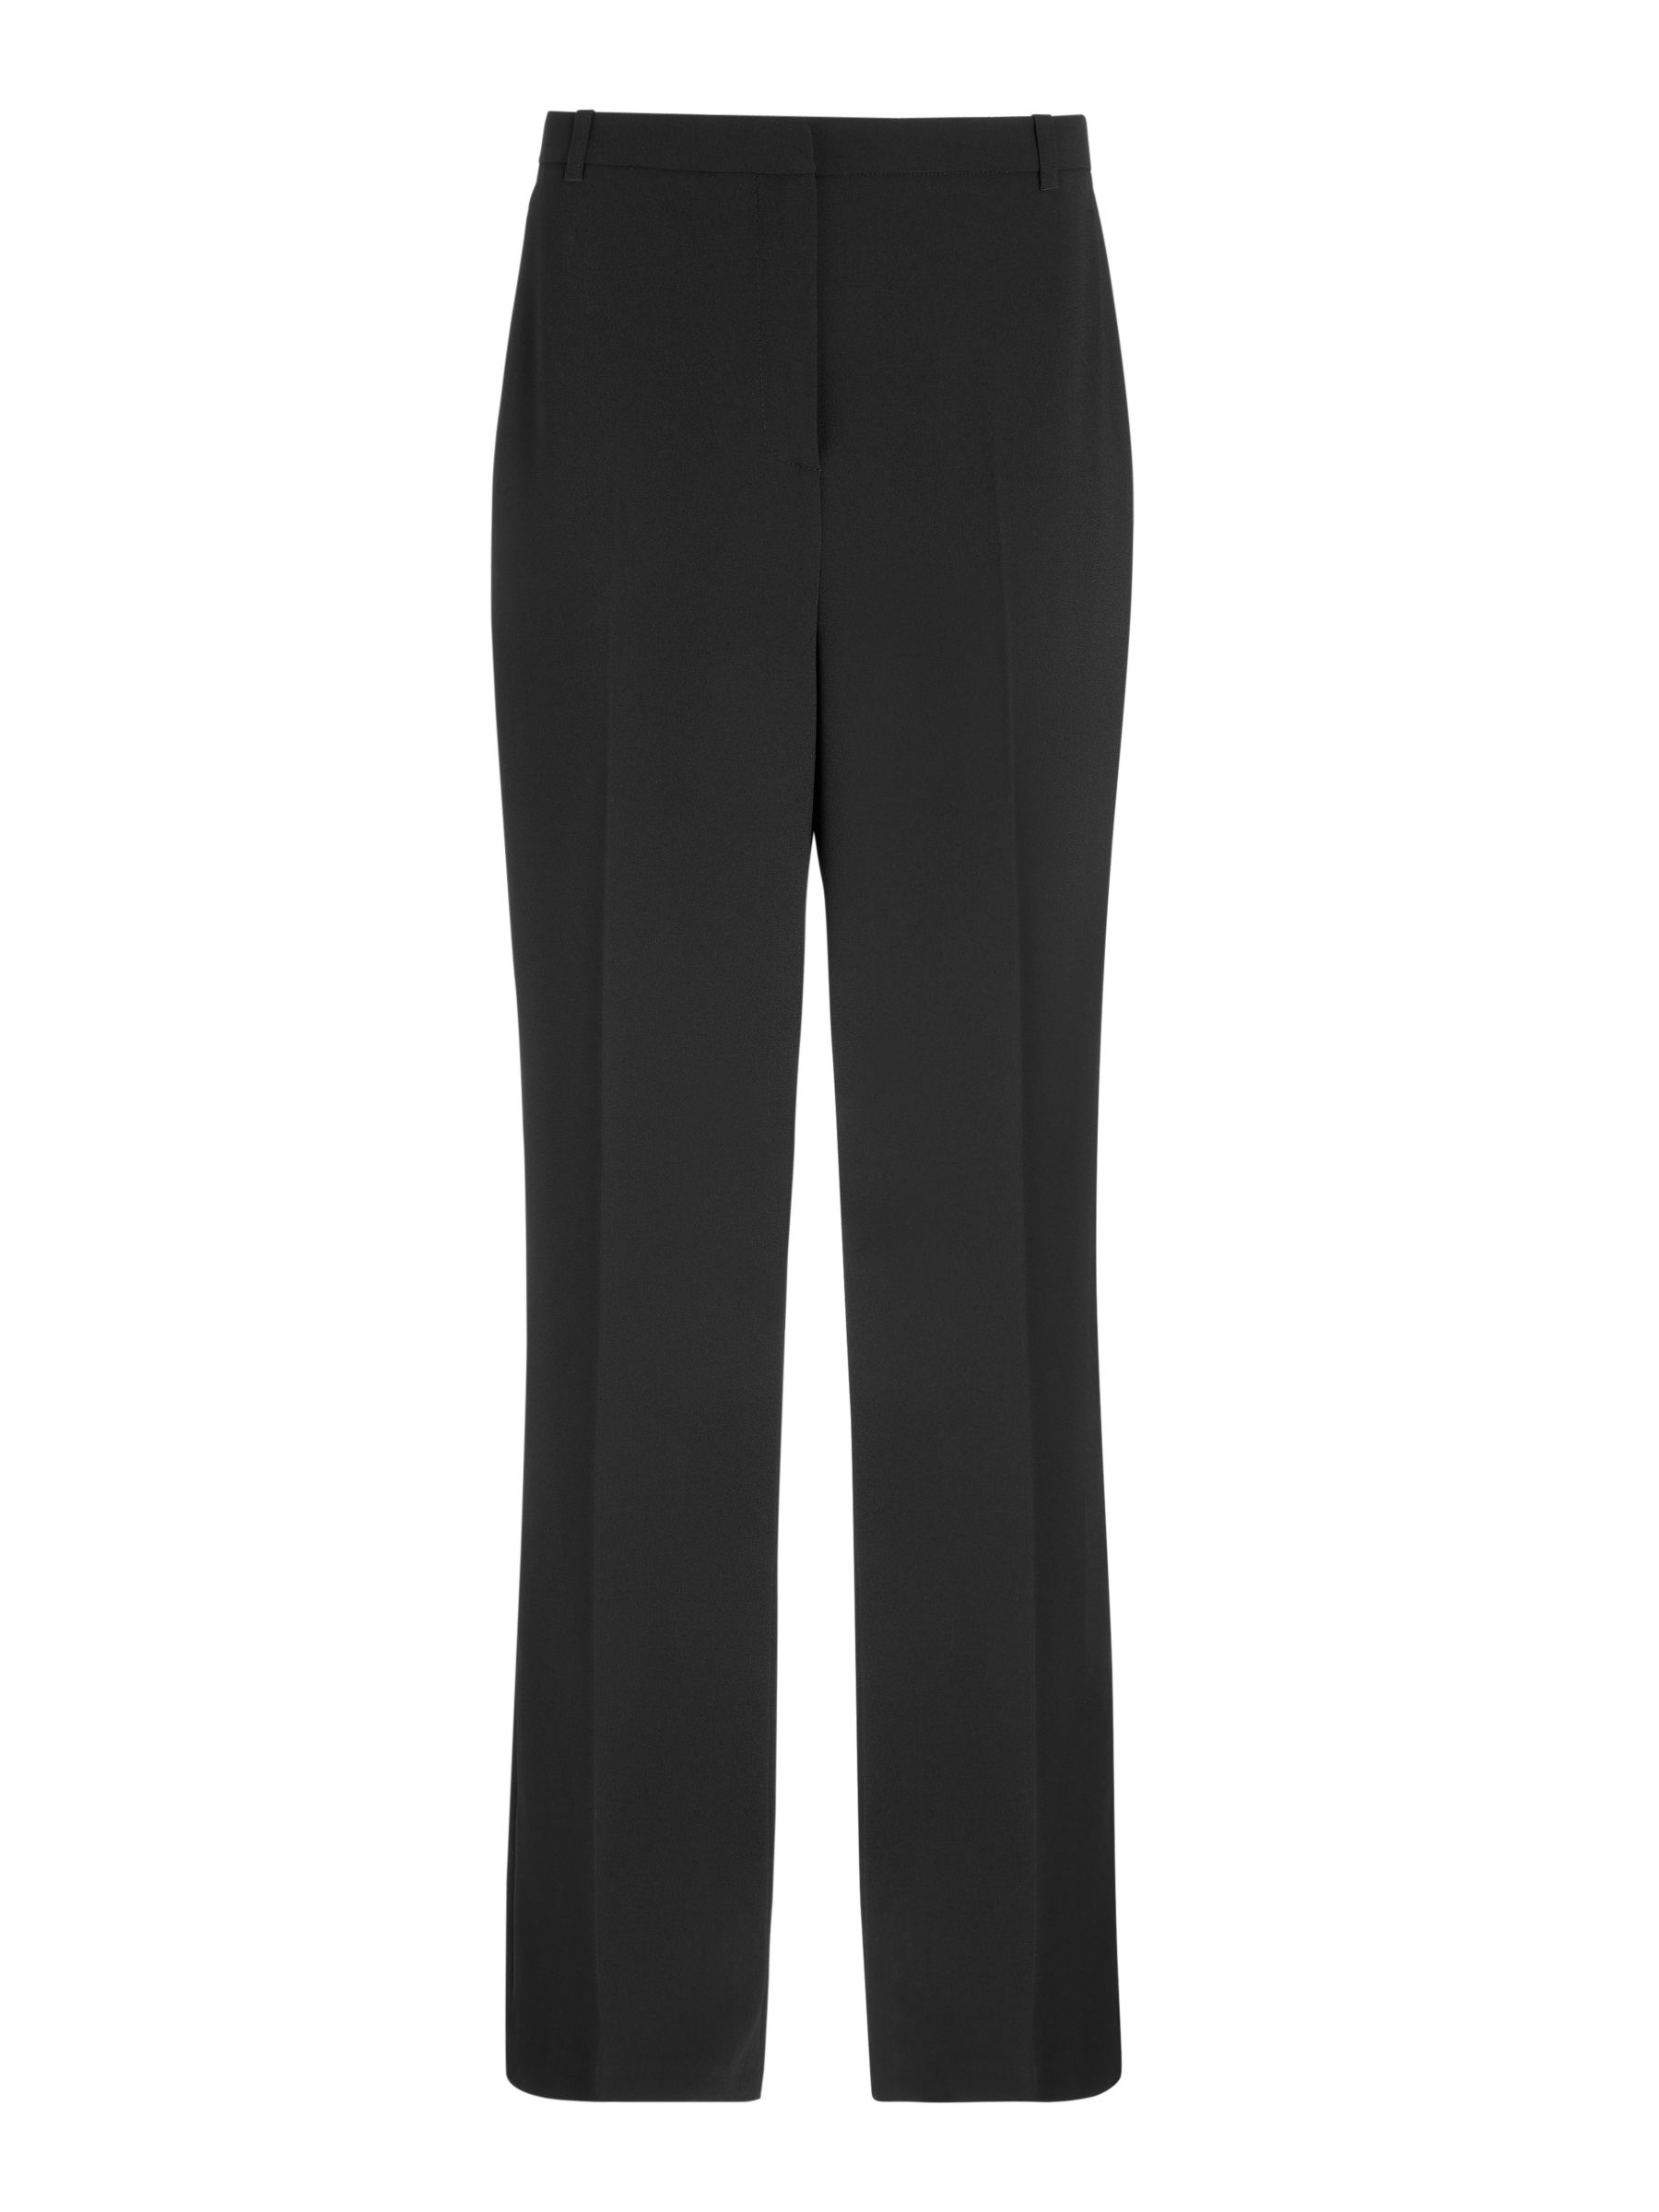 John Lewis & Partners Tailored Trousers, Black